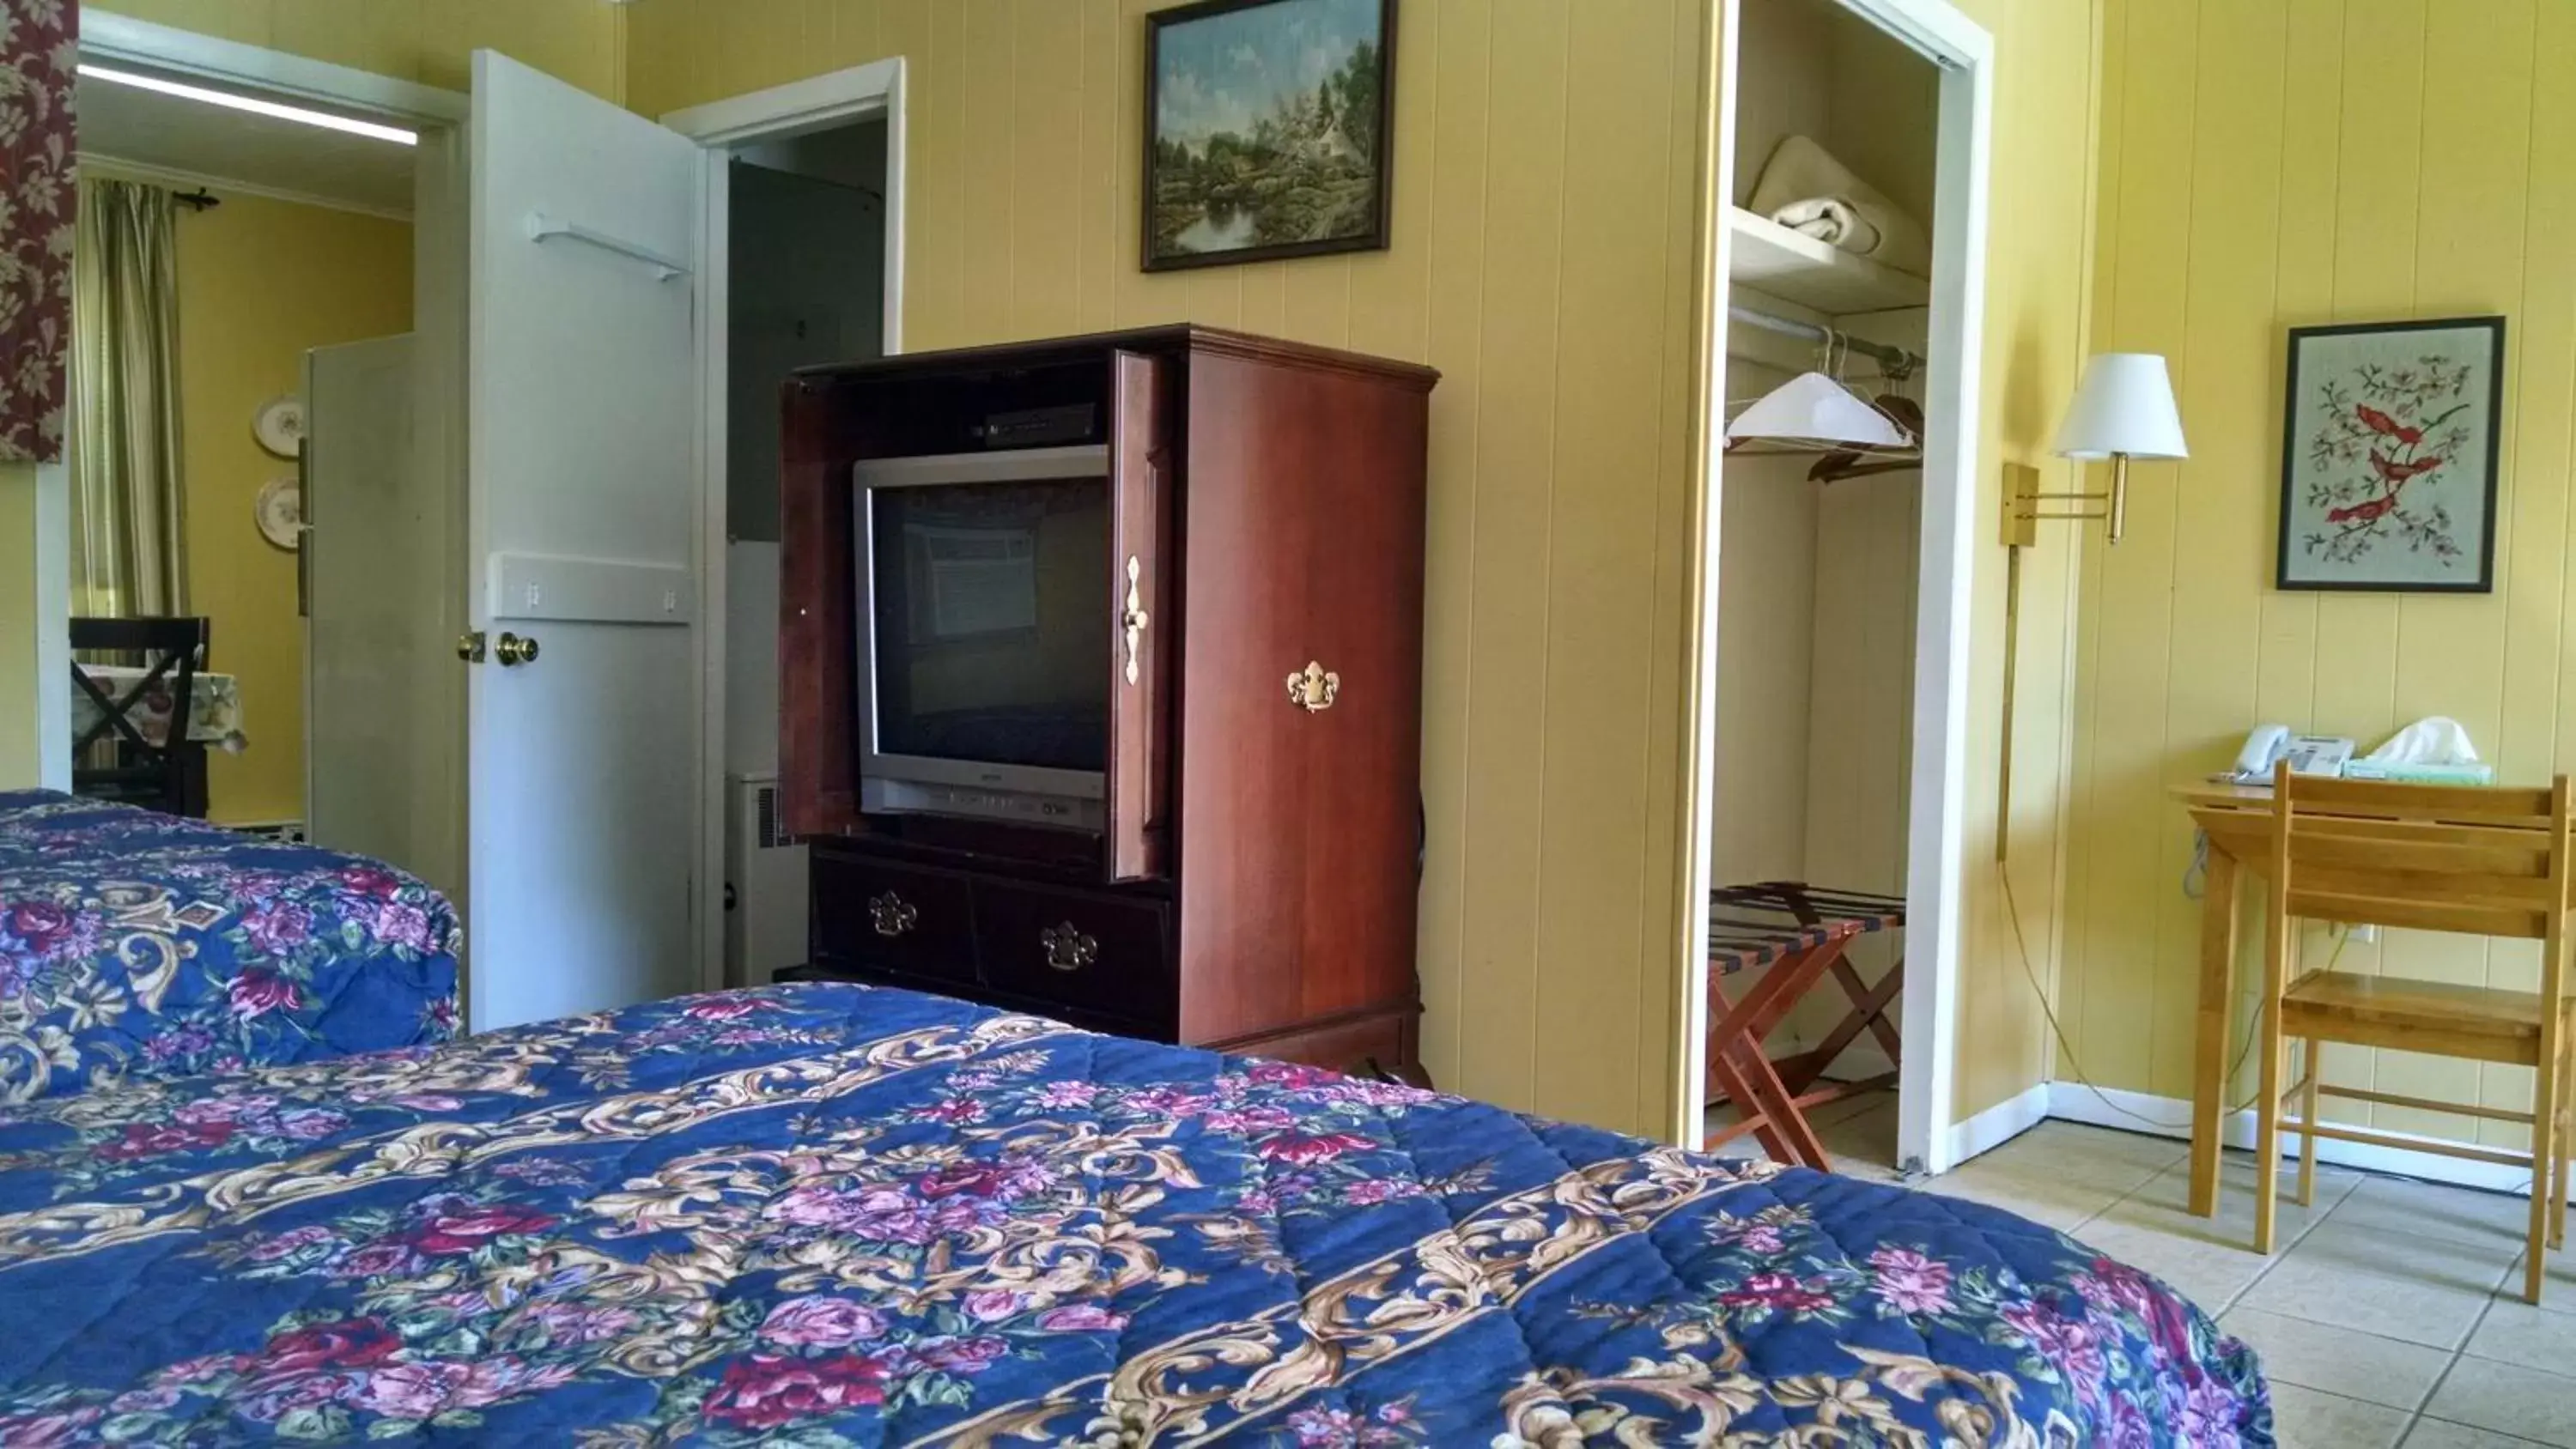 TV and multimedia, Bed in Roseloe Motel